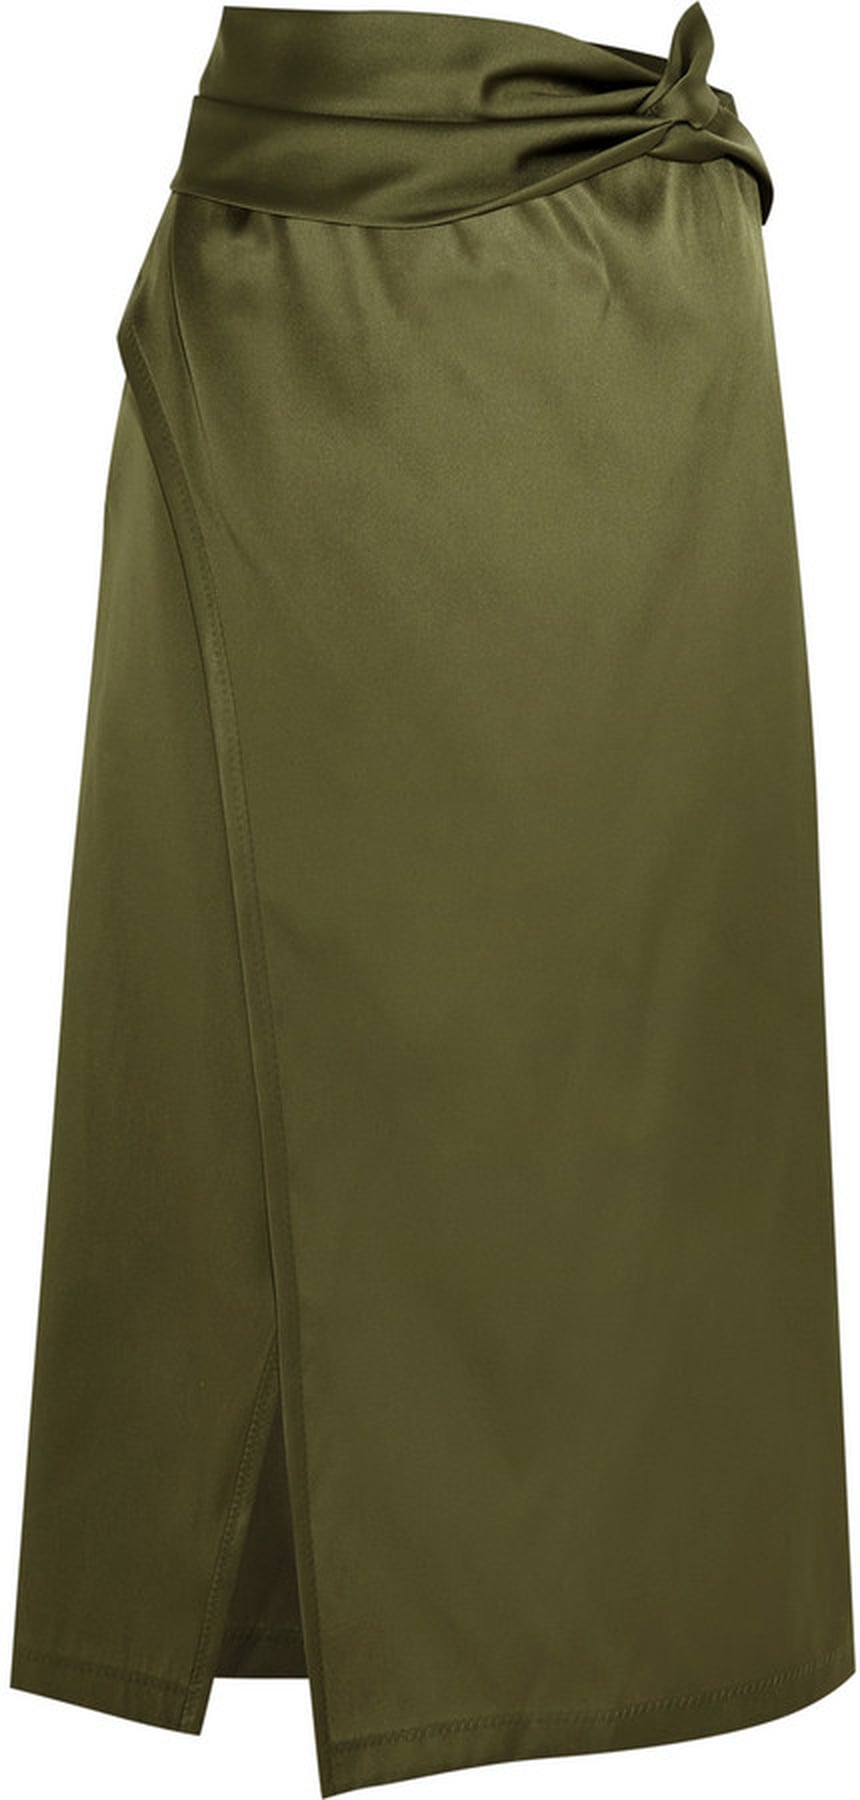 Wrap Skirts For Spring | POPSUGAR Fashion